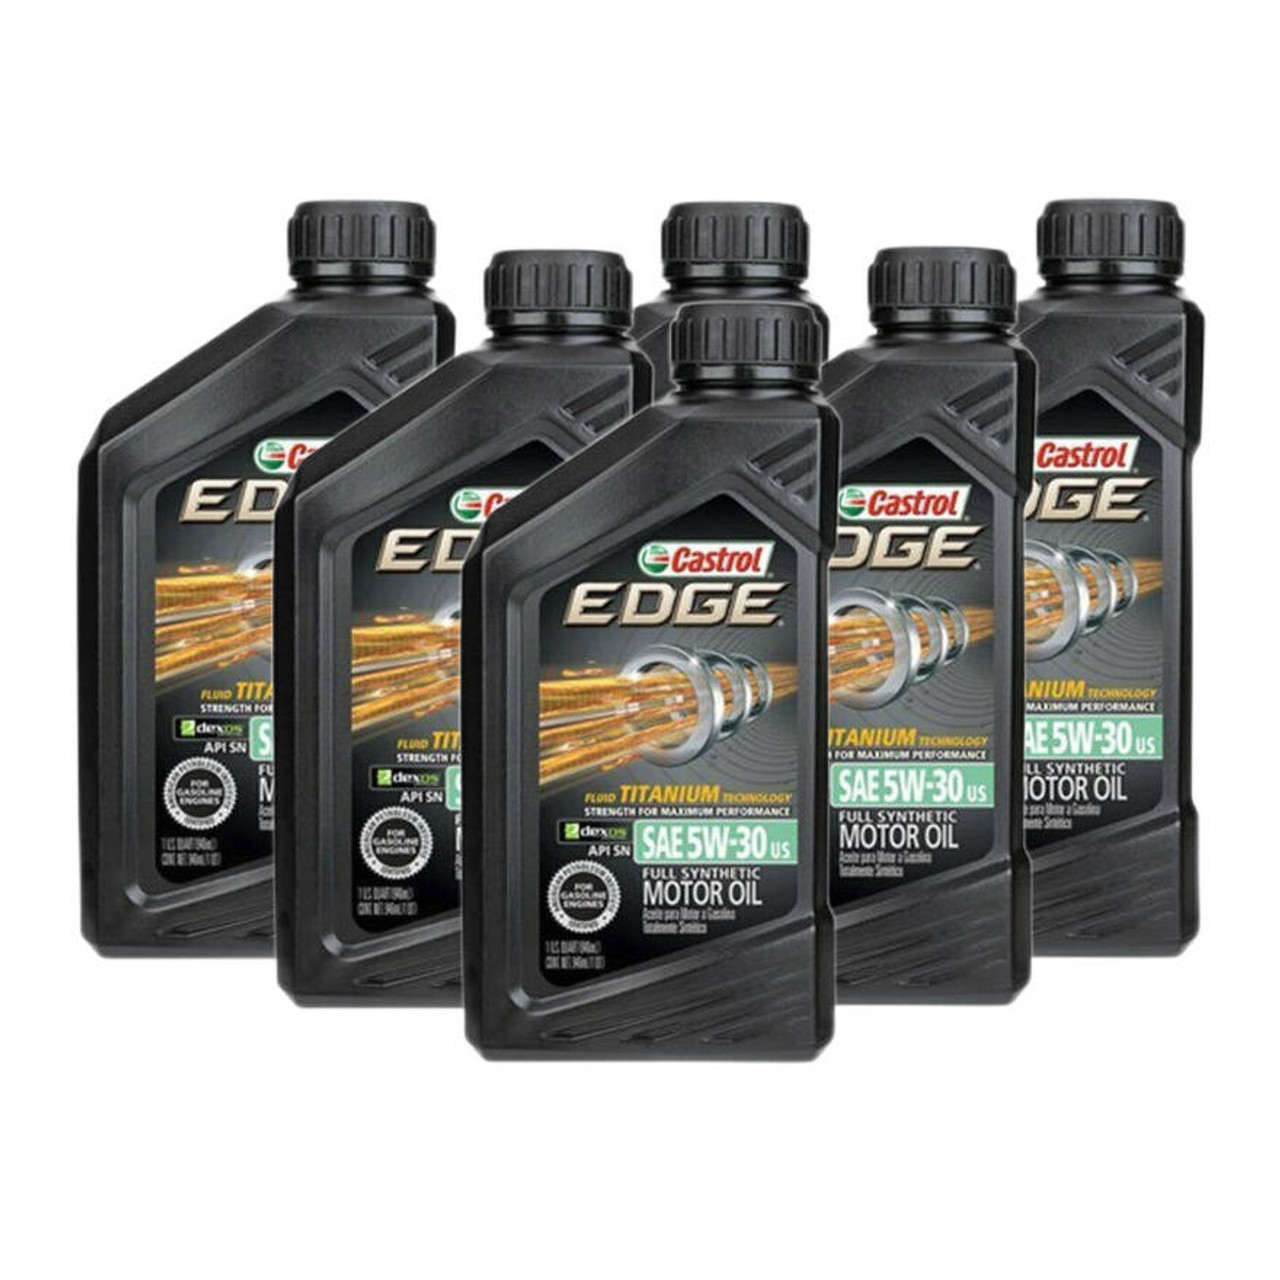  Castrol Edge 5W-30 Advanced Full Synthetic Motor Oil